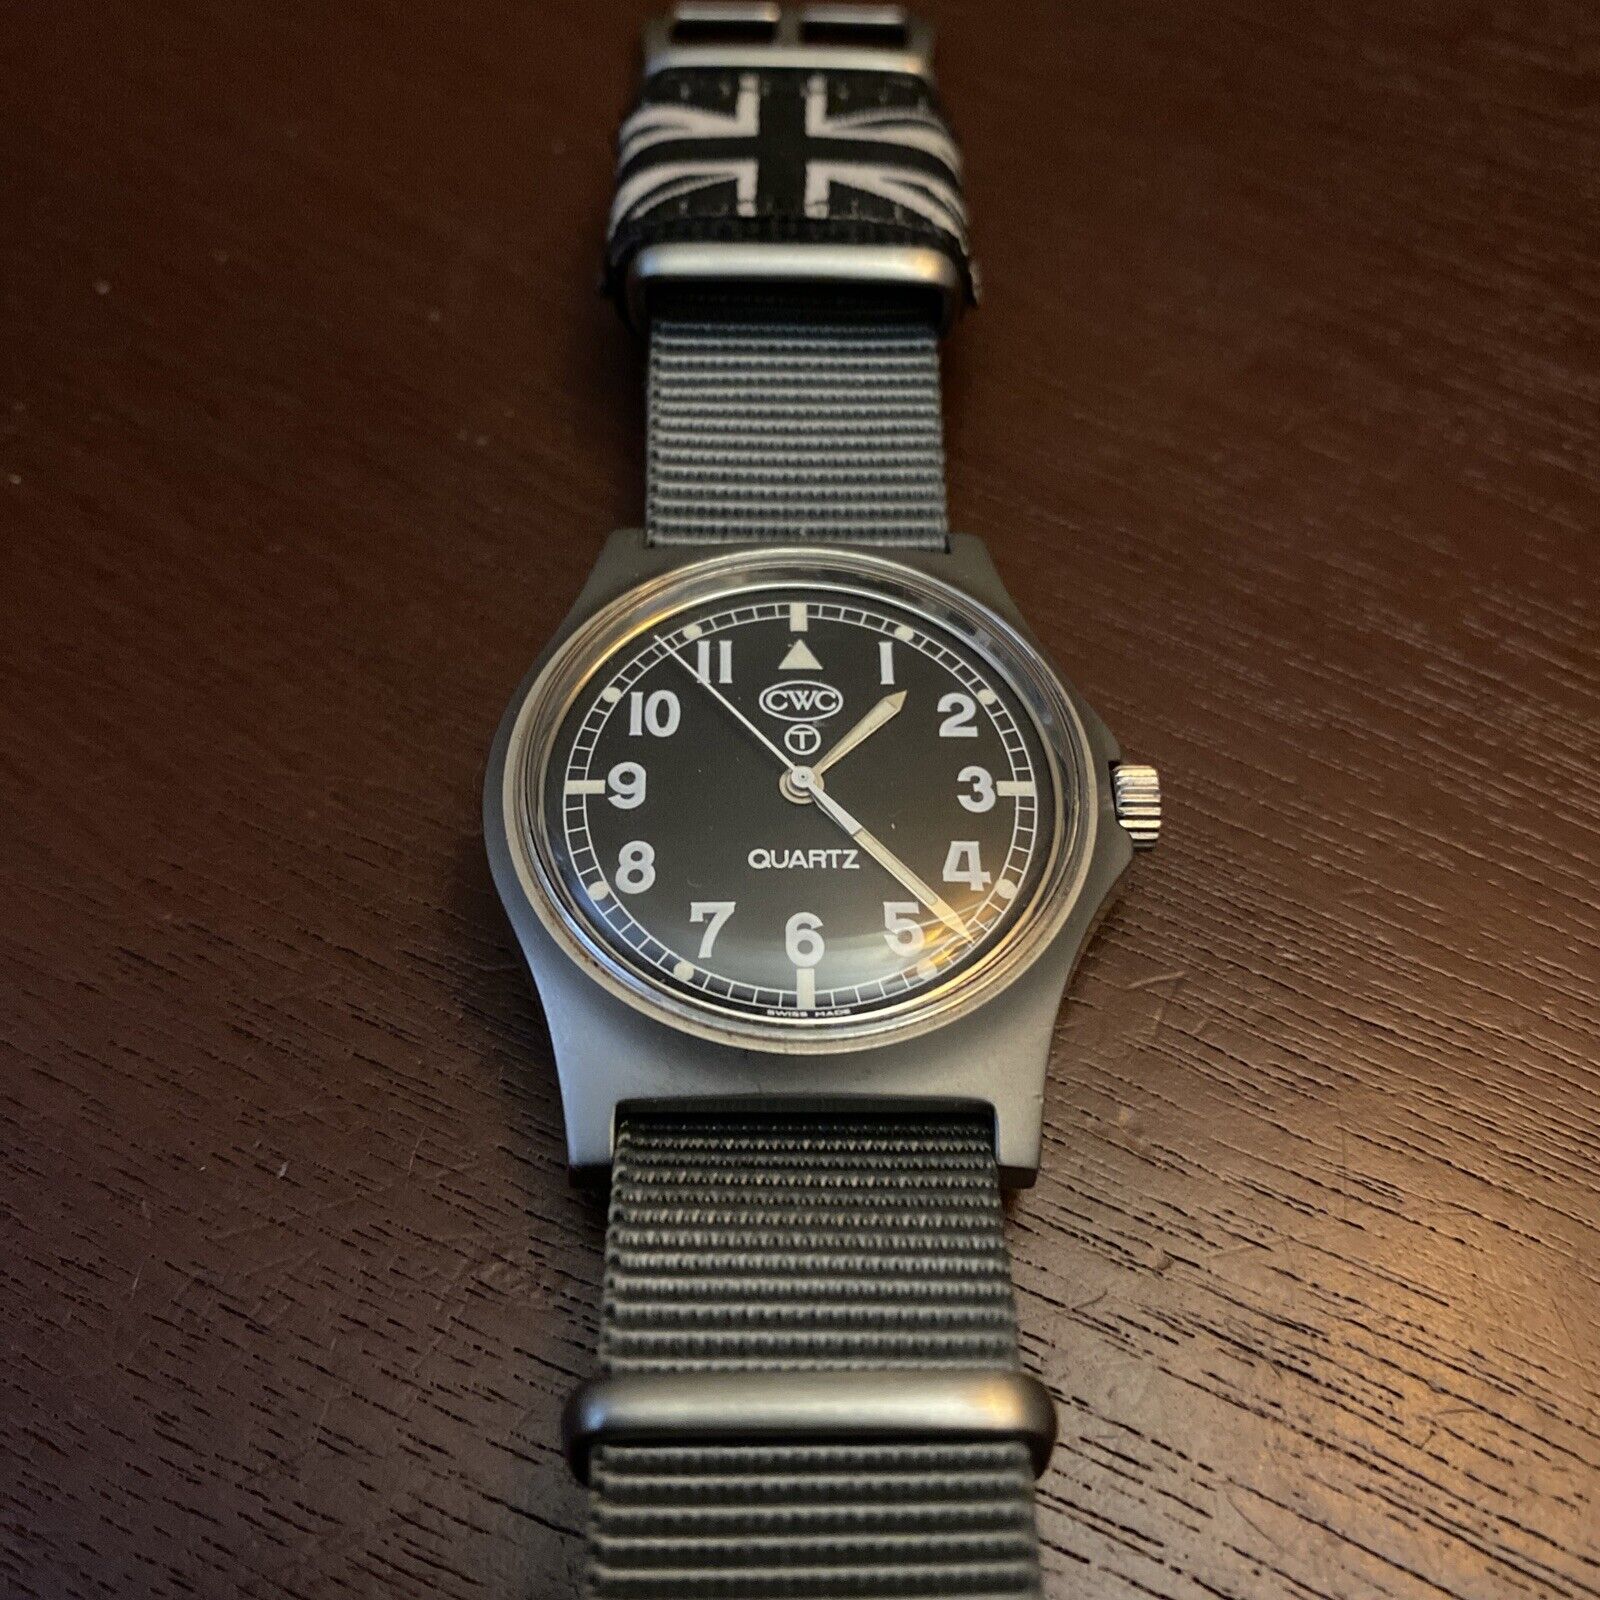 CWC G10 1989 Royal Military (Navy Issued) 50m Quartz Wristwatch